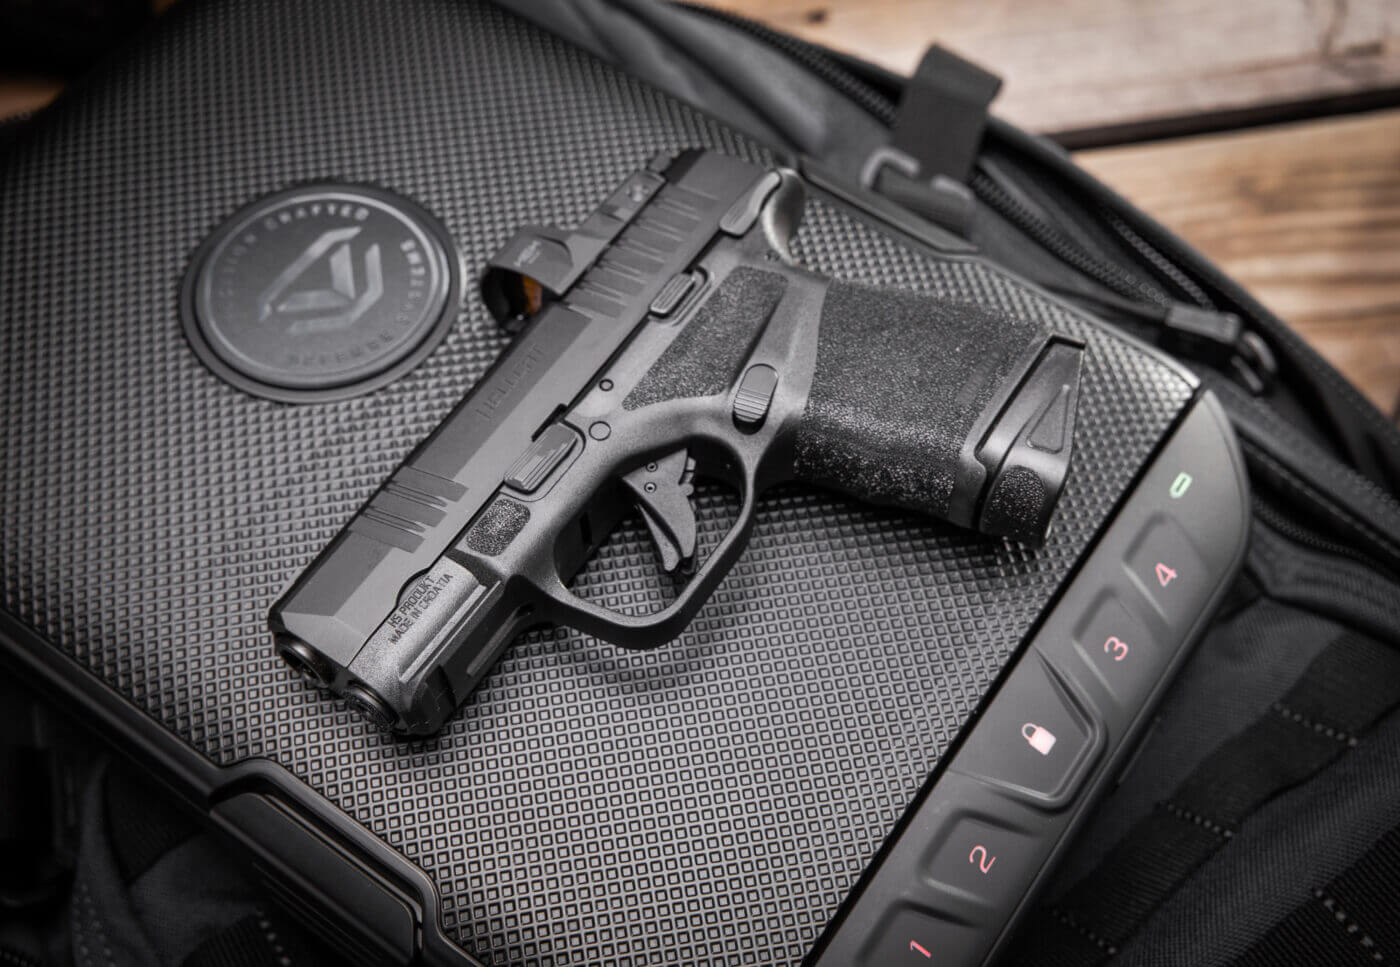 Black Springfield Hellcat handgun on top of Vaultek LifePod 2.0 lock box